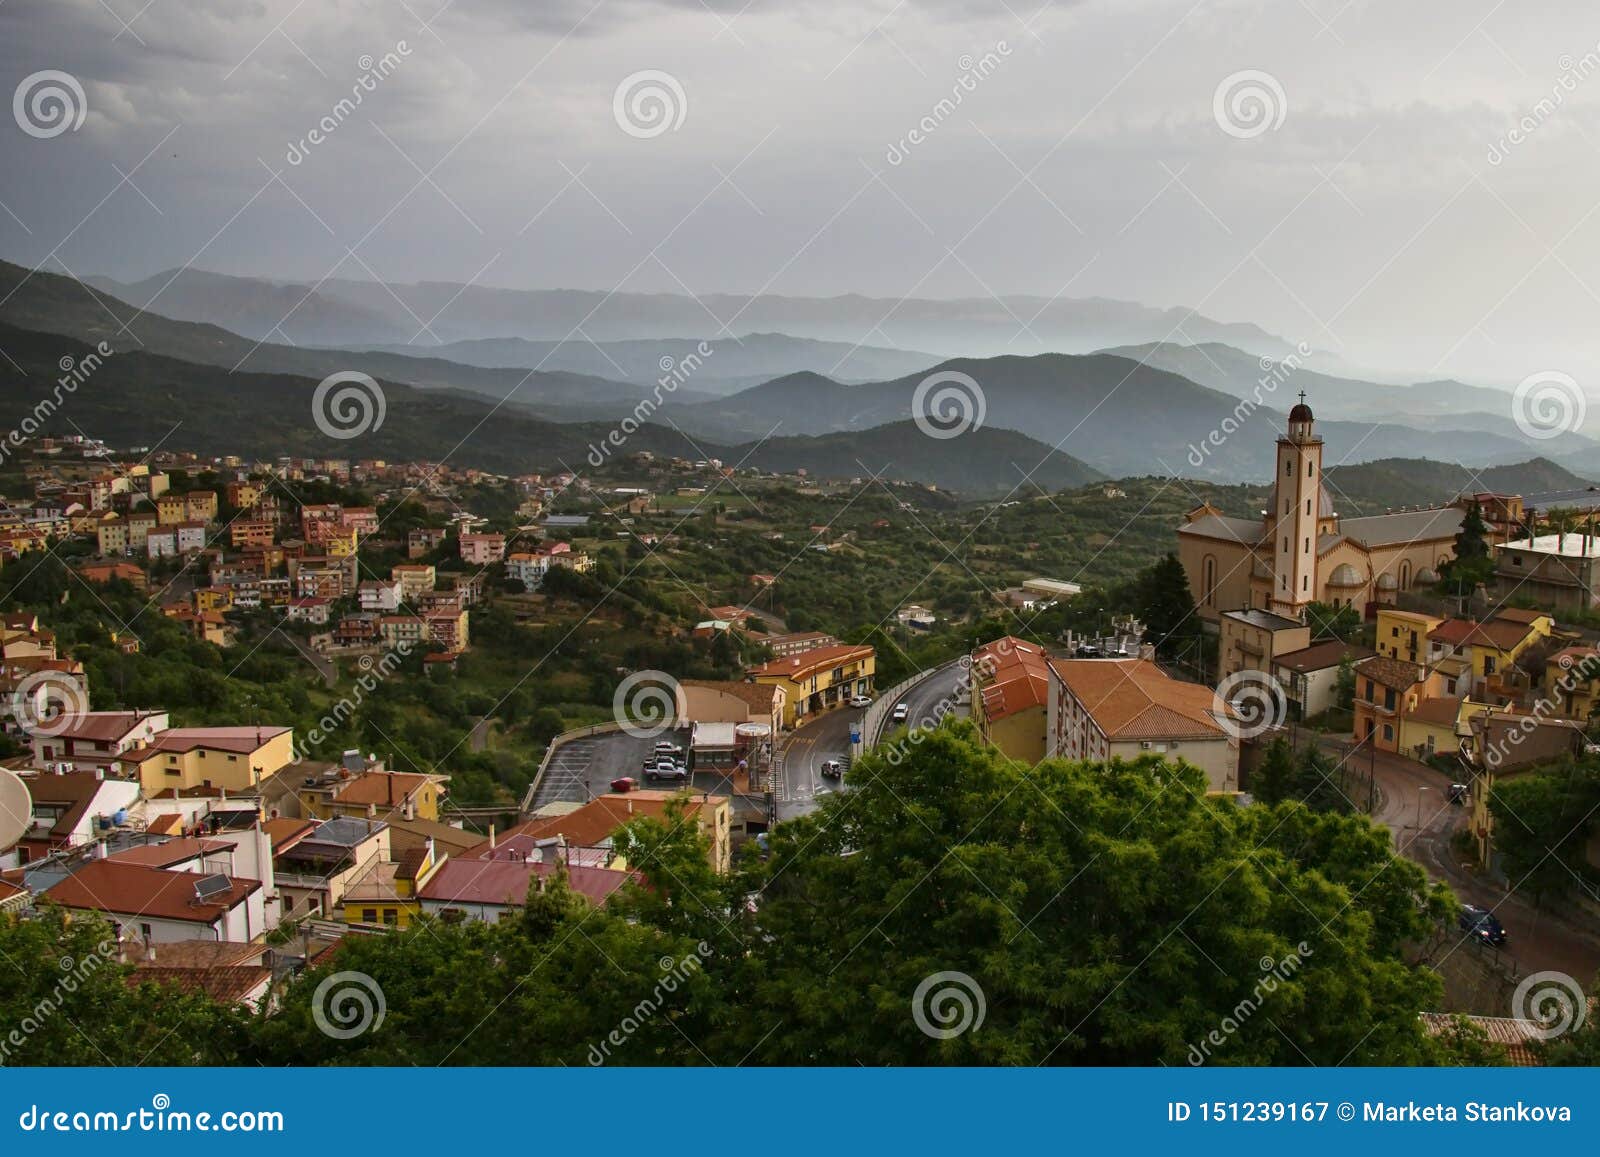 Sardinia Lanusei in the Misty Morning Stock Image - Image of italy ...